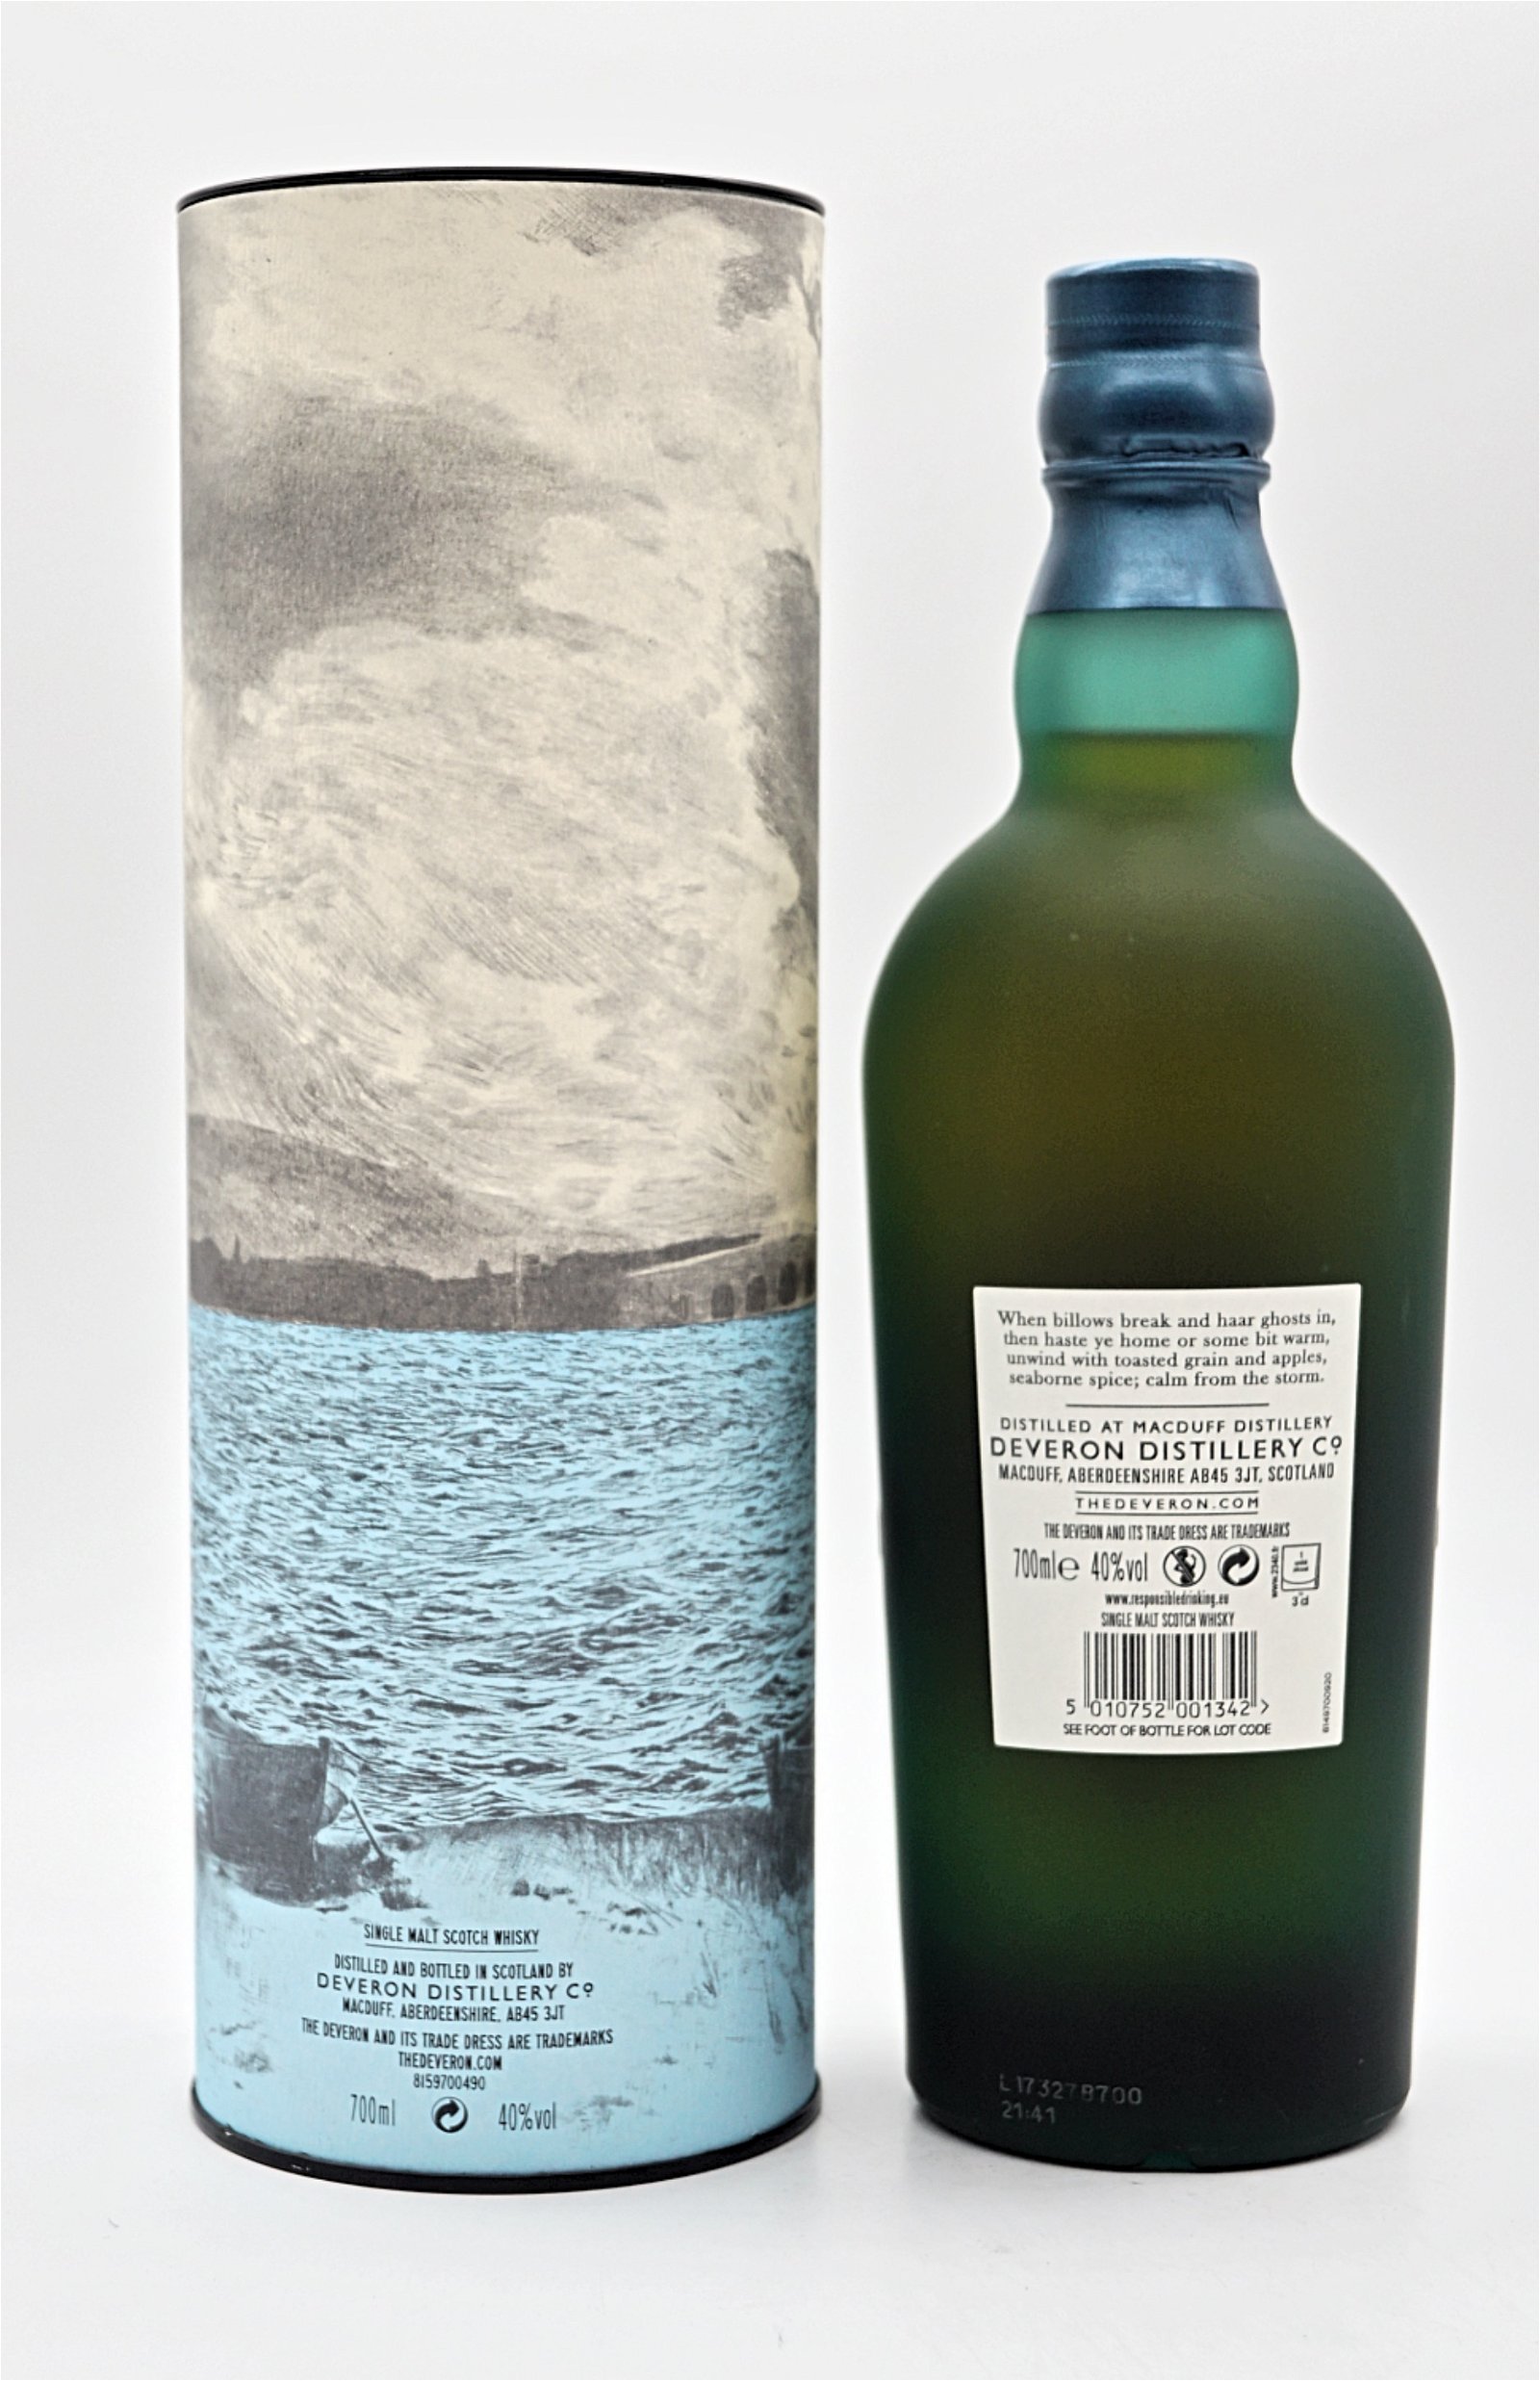 The Deveron 12 Jahre Highland Single Malt Scotch Whisky